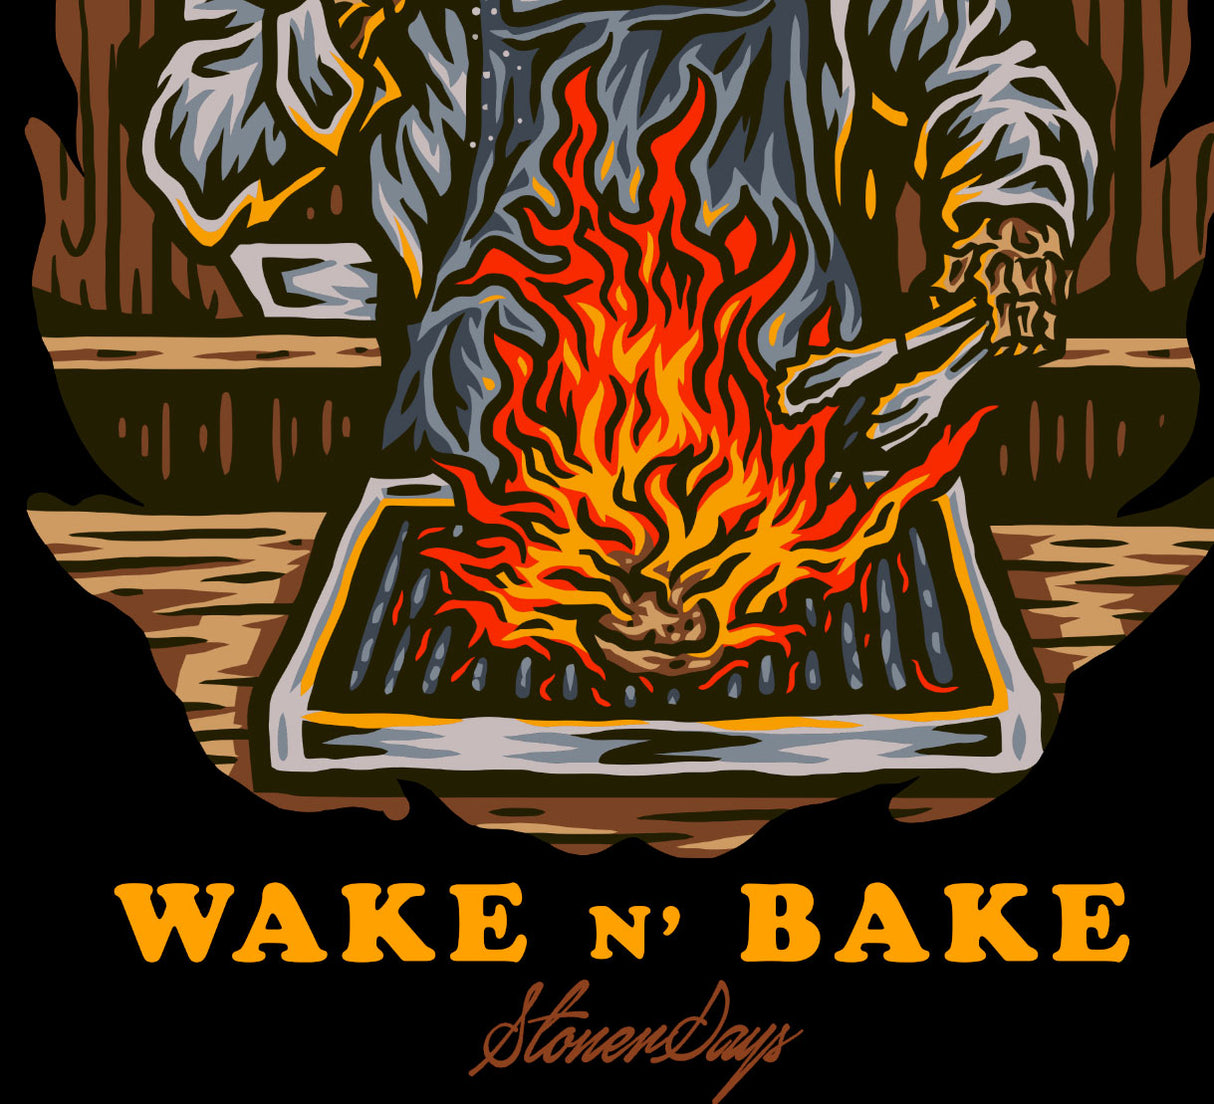 StonerDays Wake N Bake 12x8" Dab Mat with vibrant fire design, top view